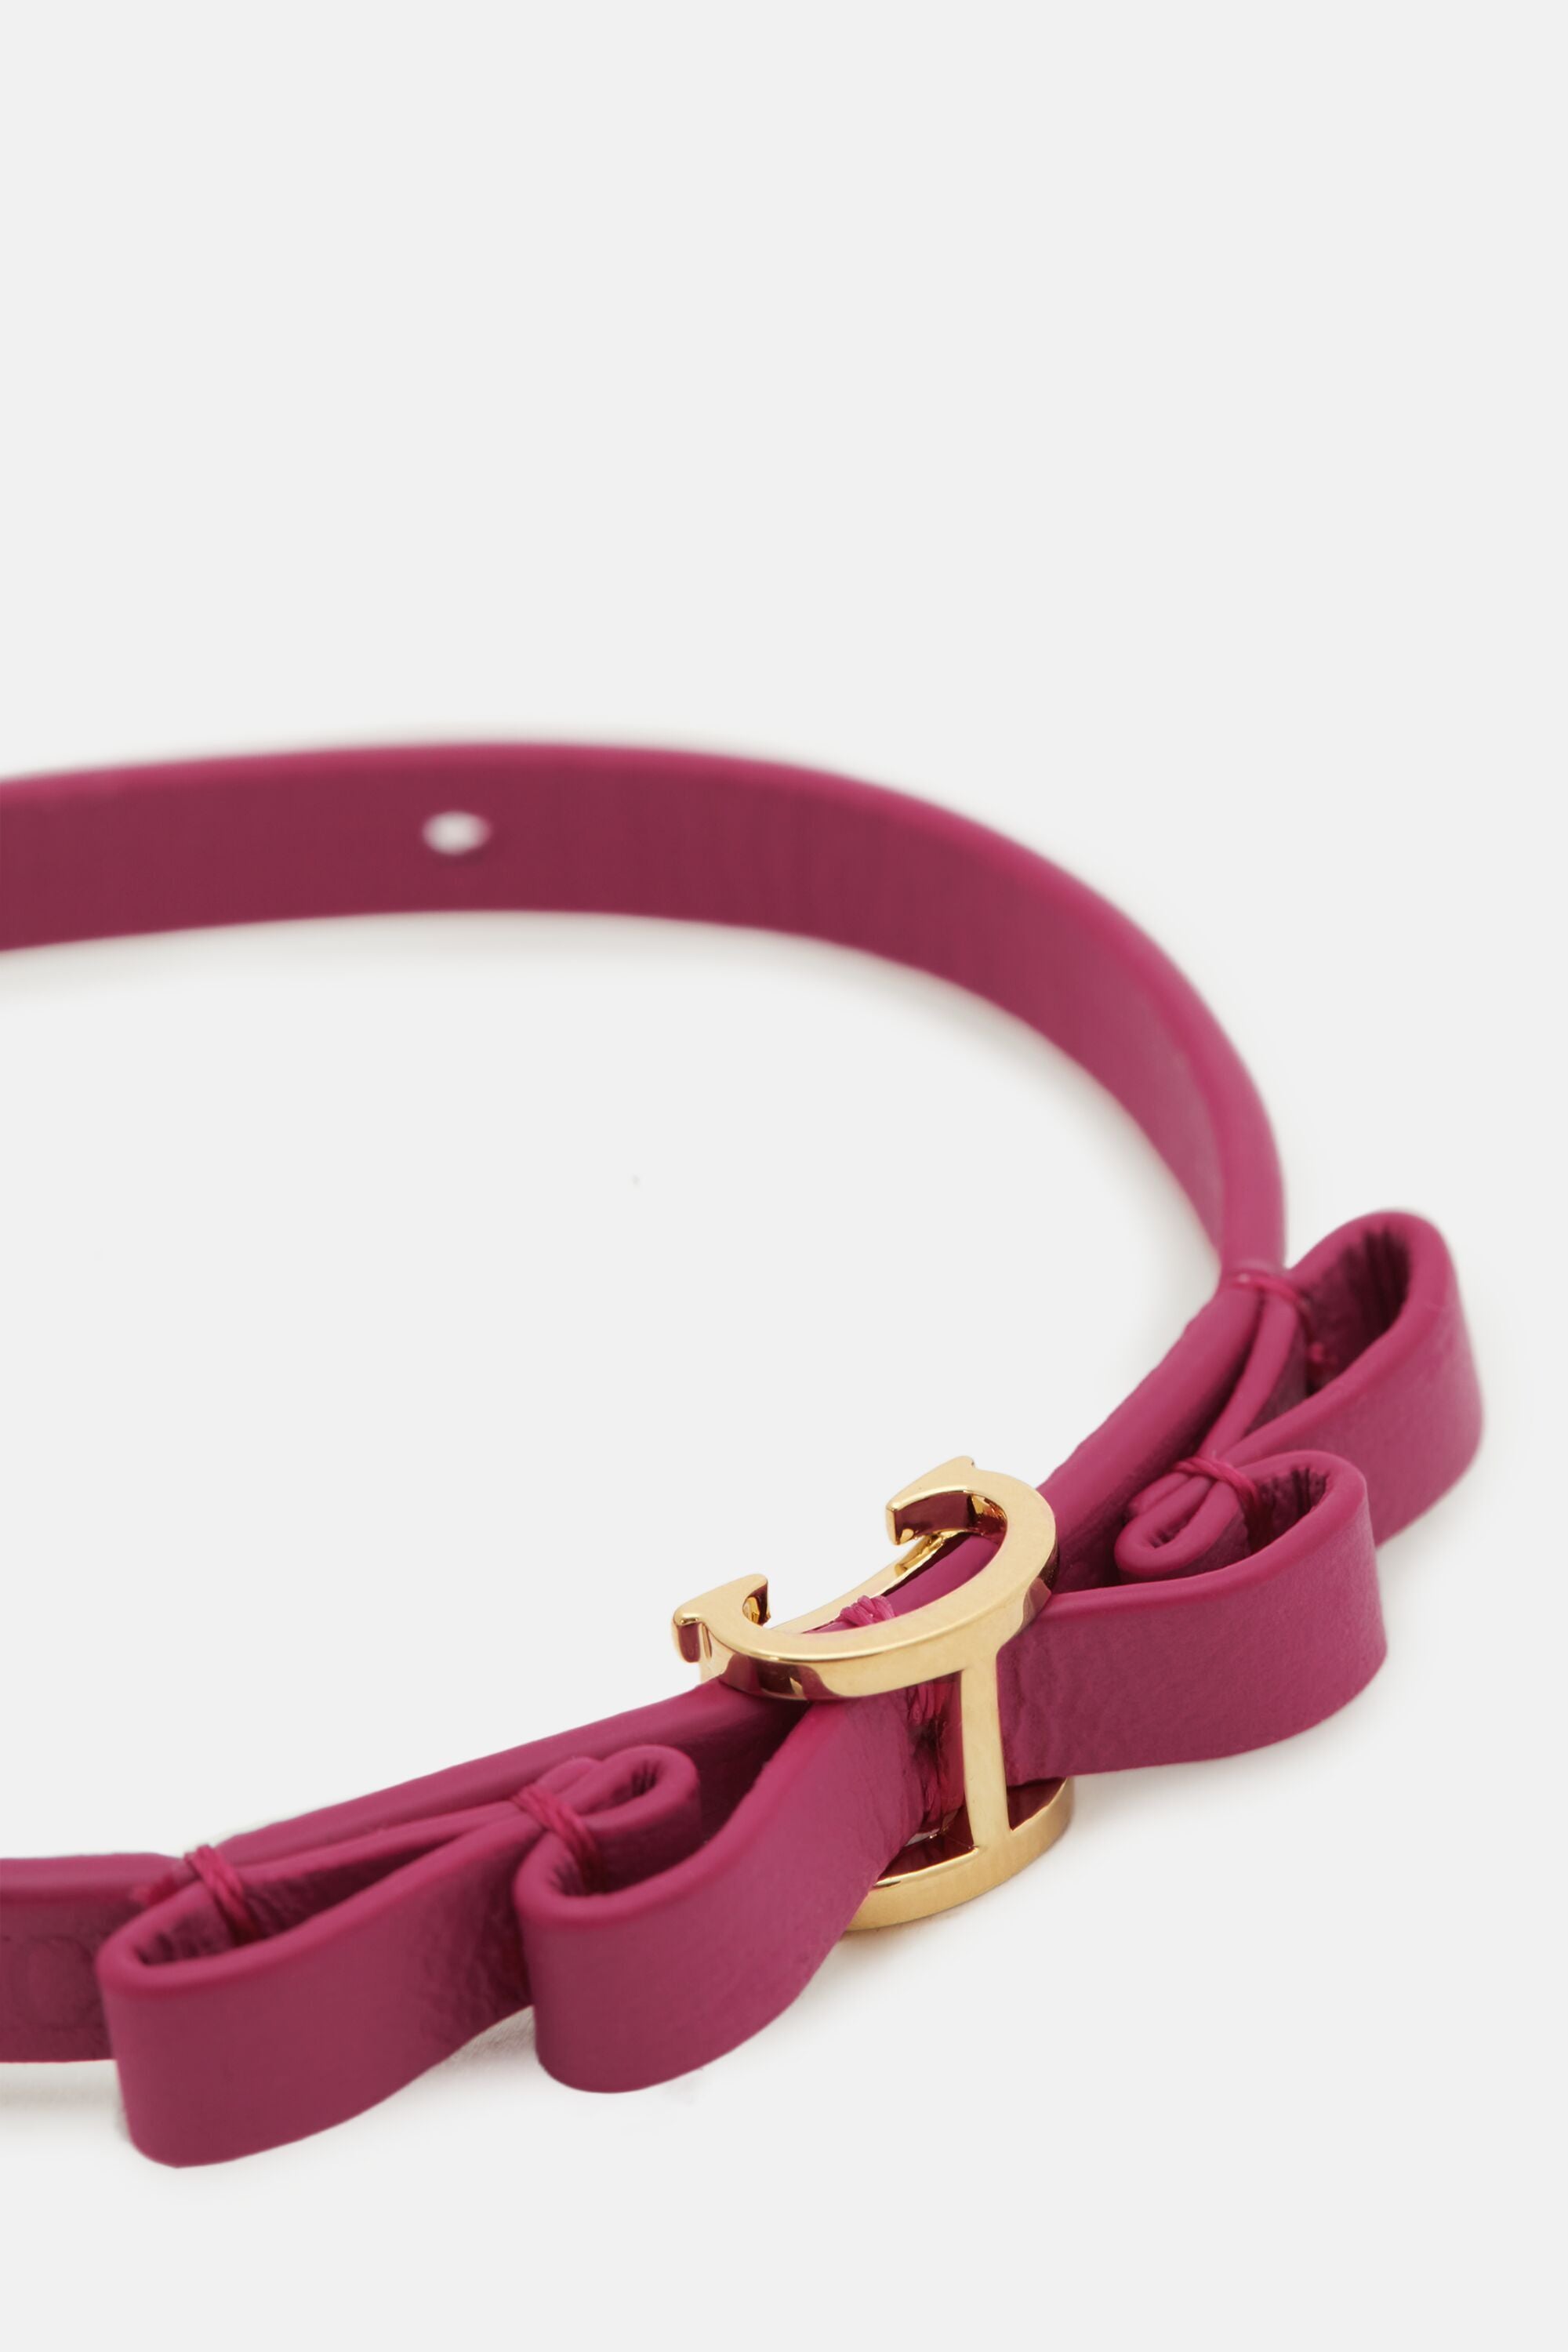 Salvatore Ferragamo Gancini Leather Bracelet, Brown | Leather bracelet,  Mens accessories fashion, Leather